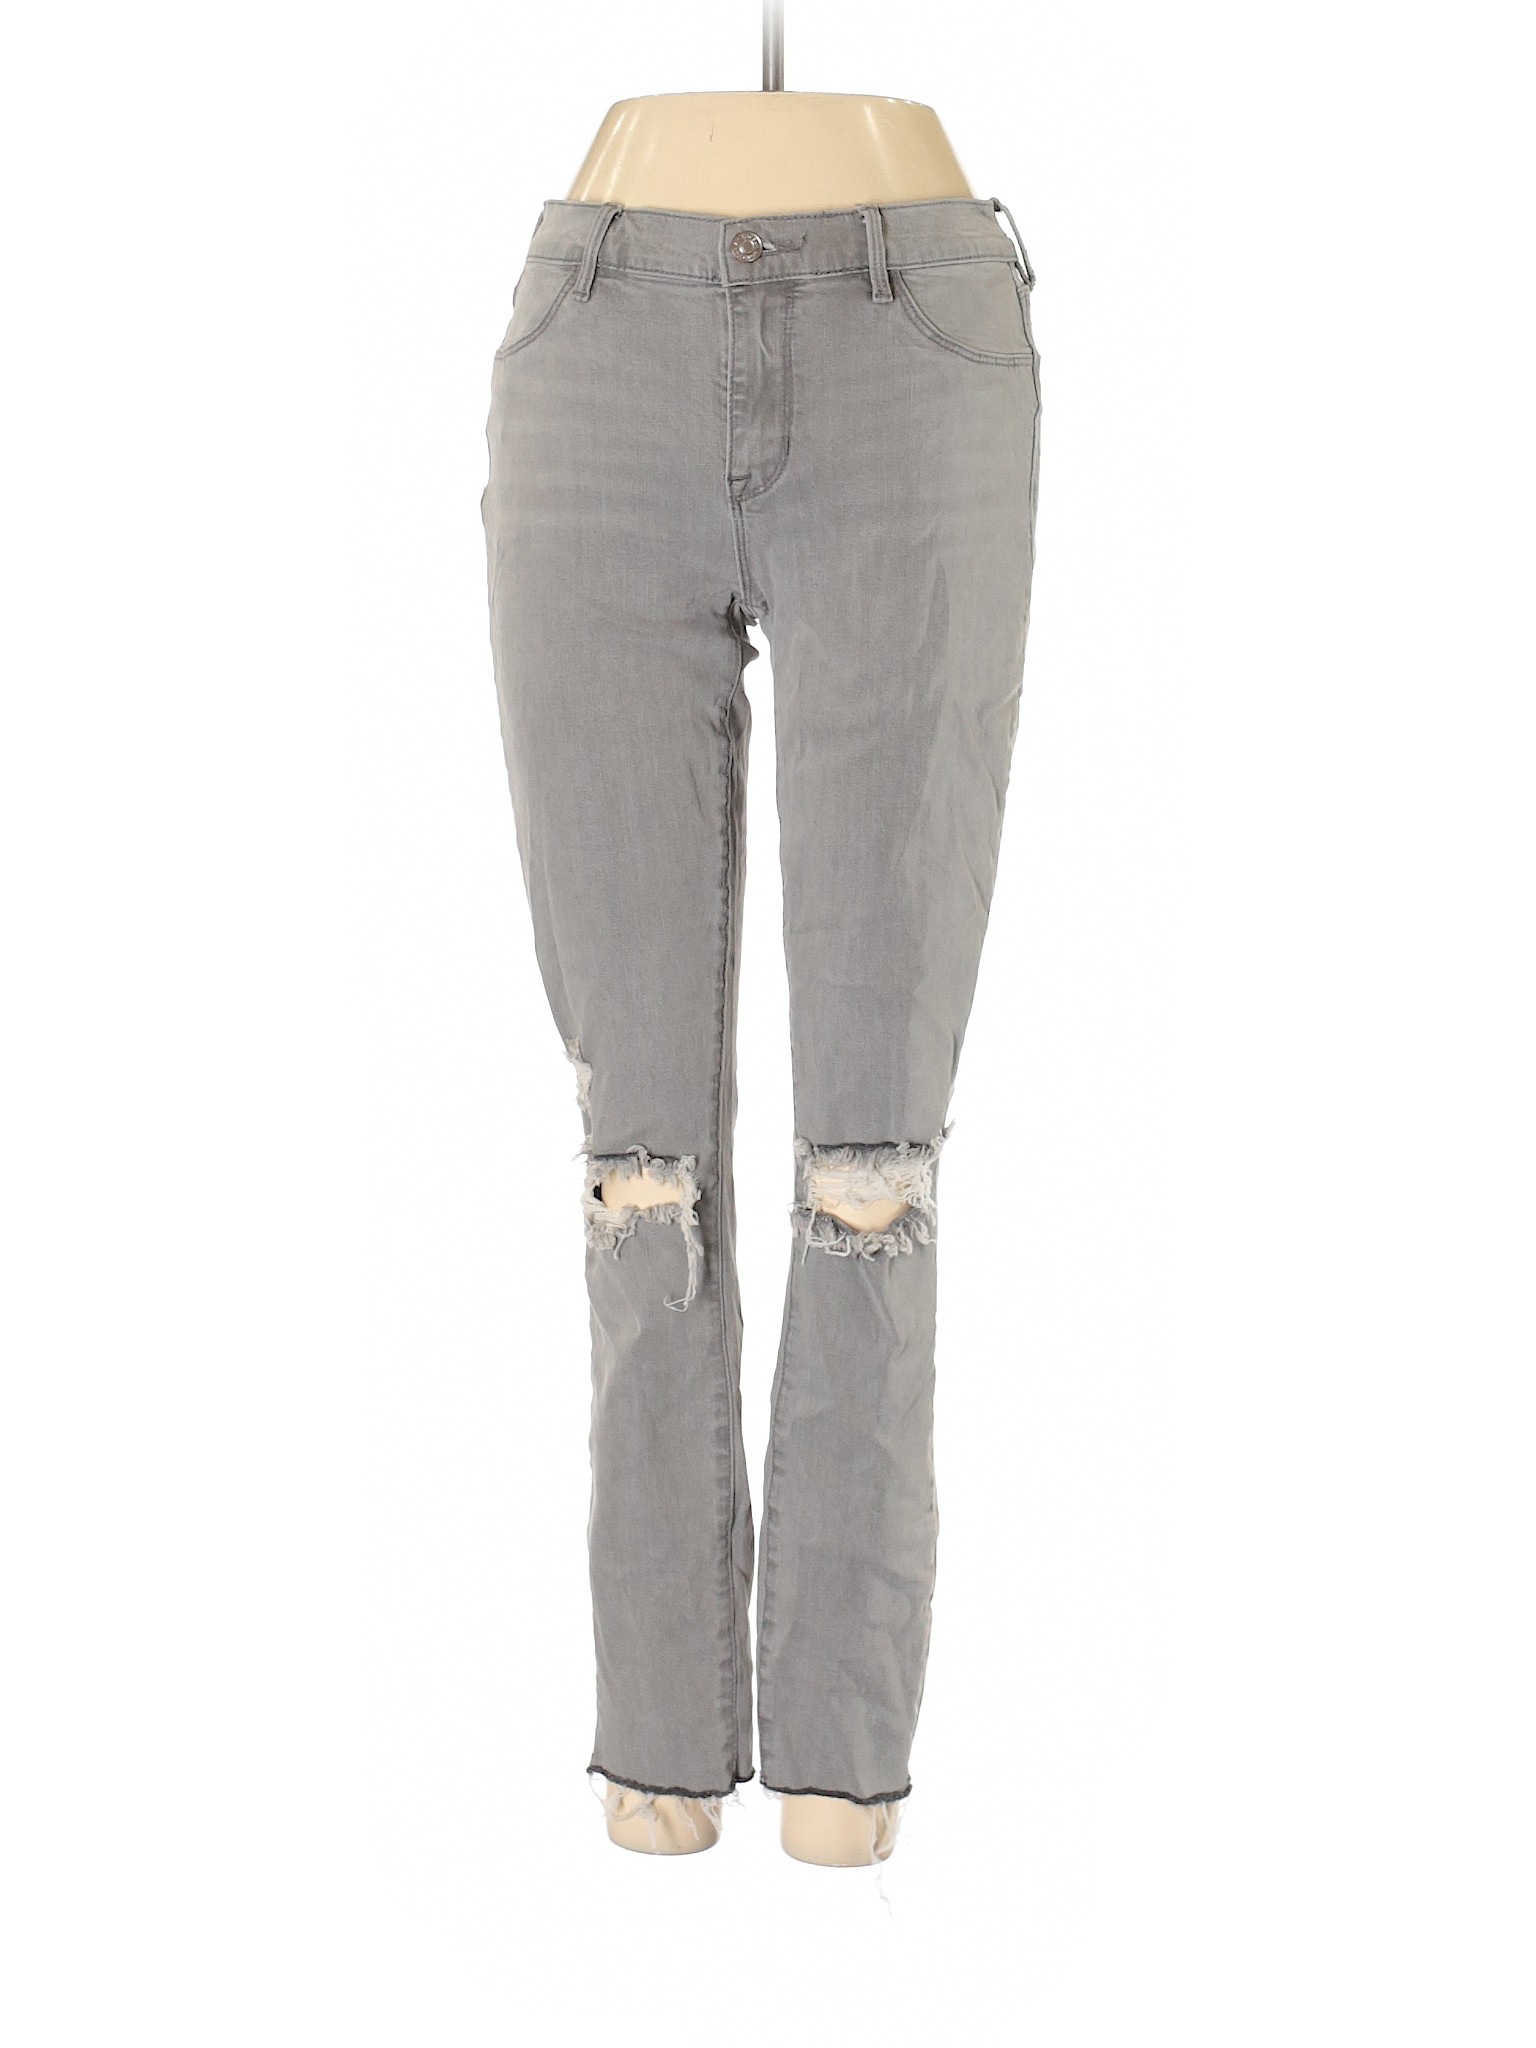 PacSun Women Gray Jeans 24W | eBay